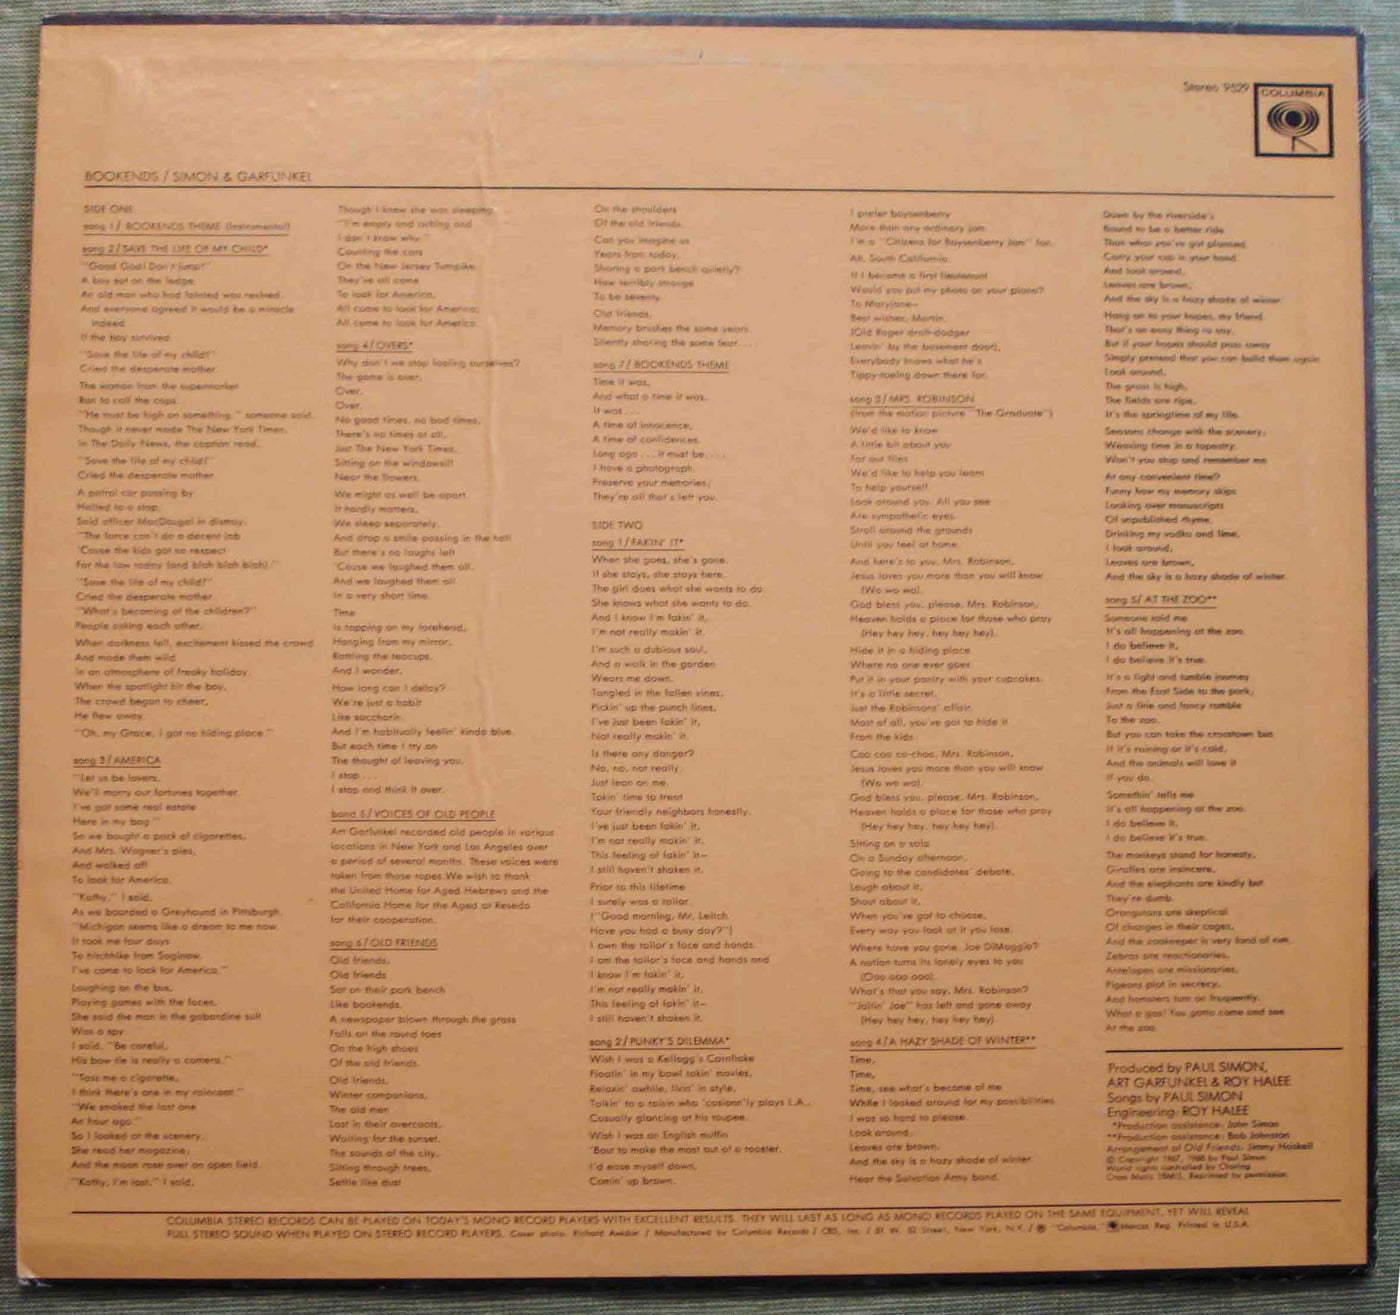 Simon and Garfunkel - Bookends (1968) Vinyl LP 33rpm KCS9529